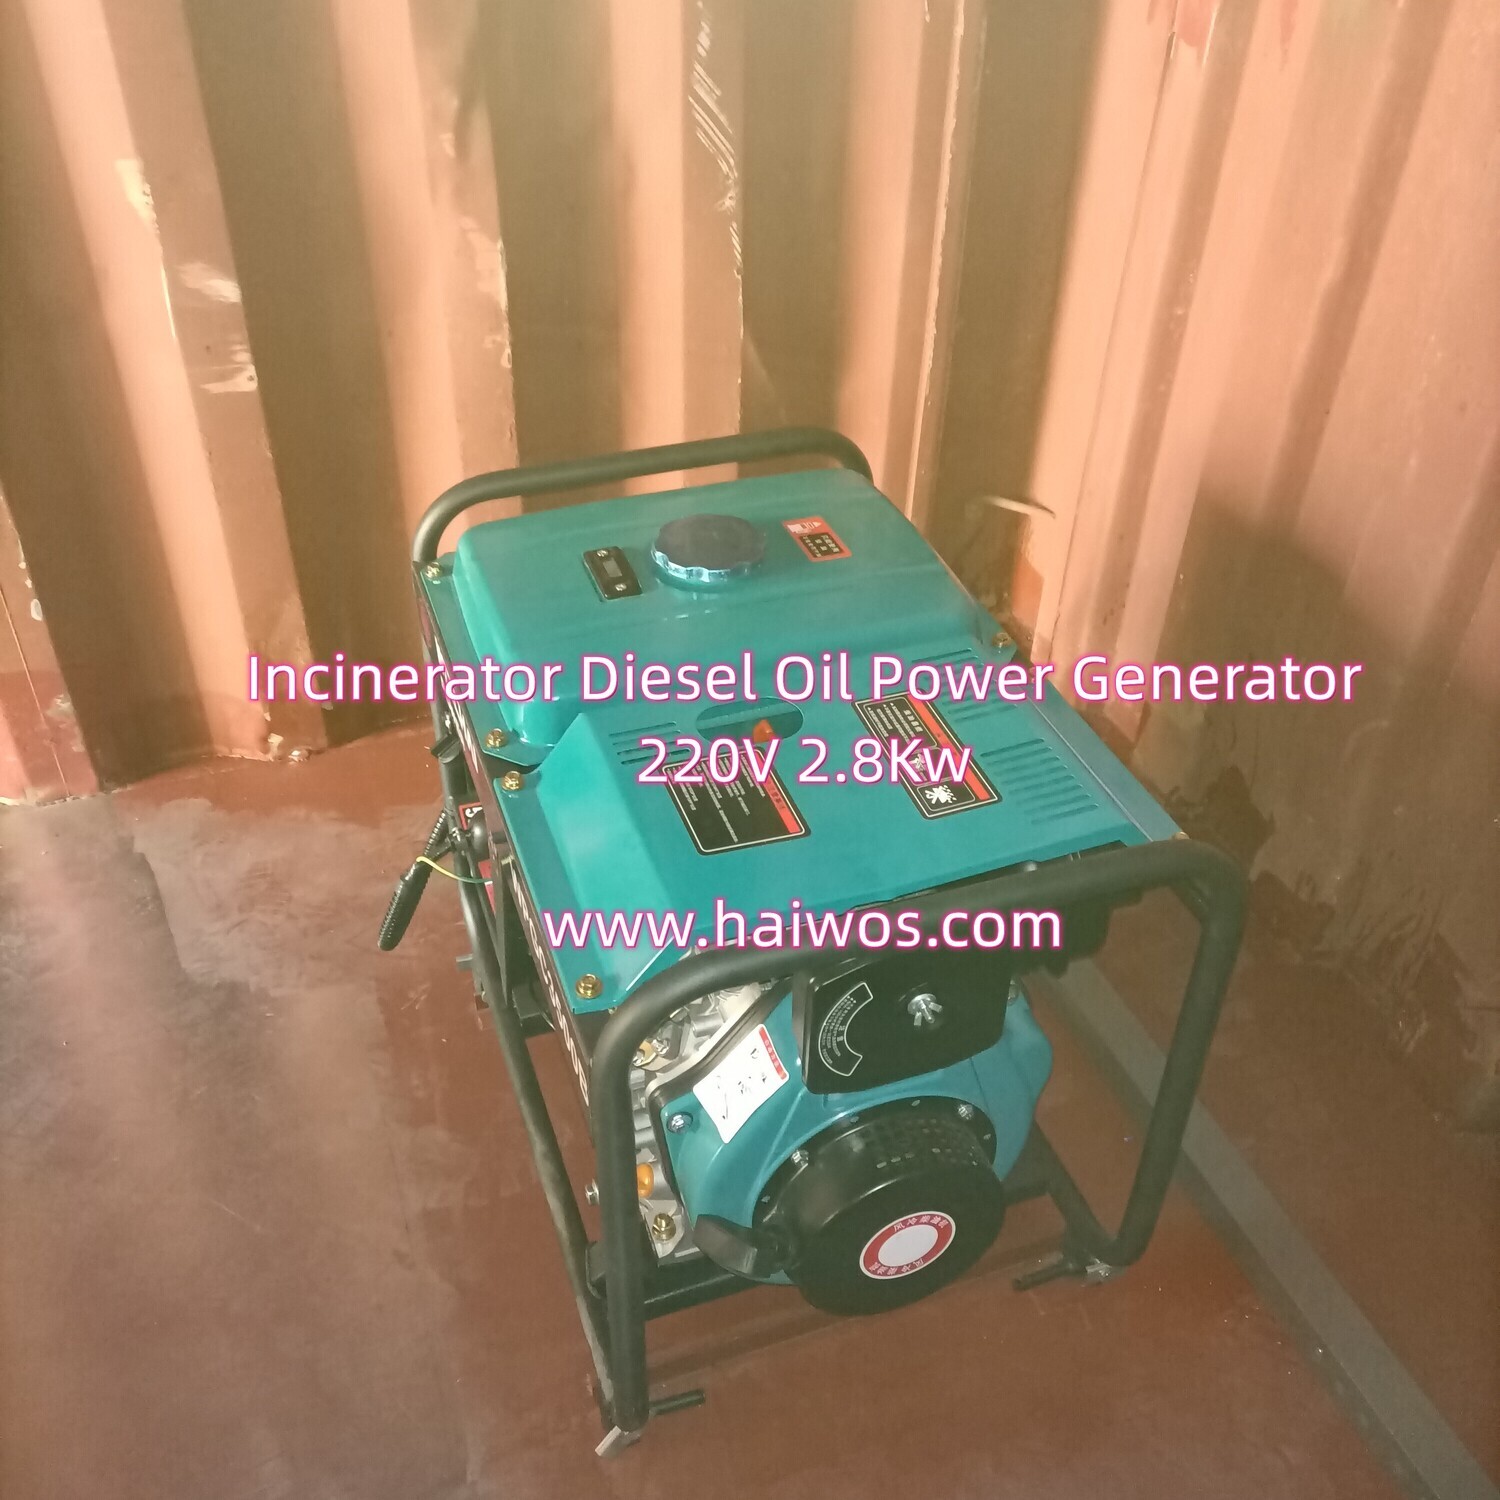 Diesel Oil power generator for Waste Incinerator 220v 2.8kw